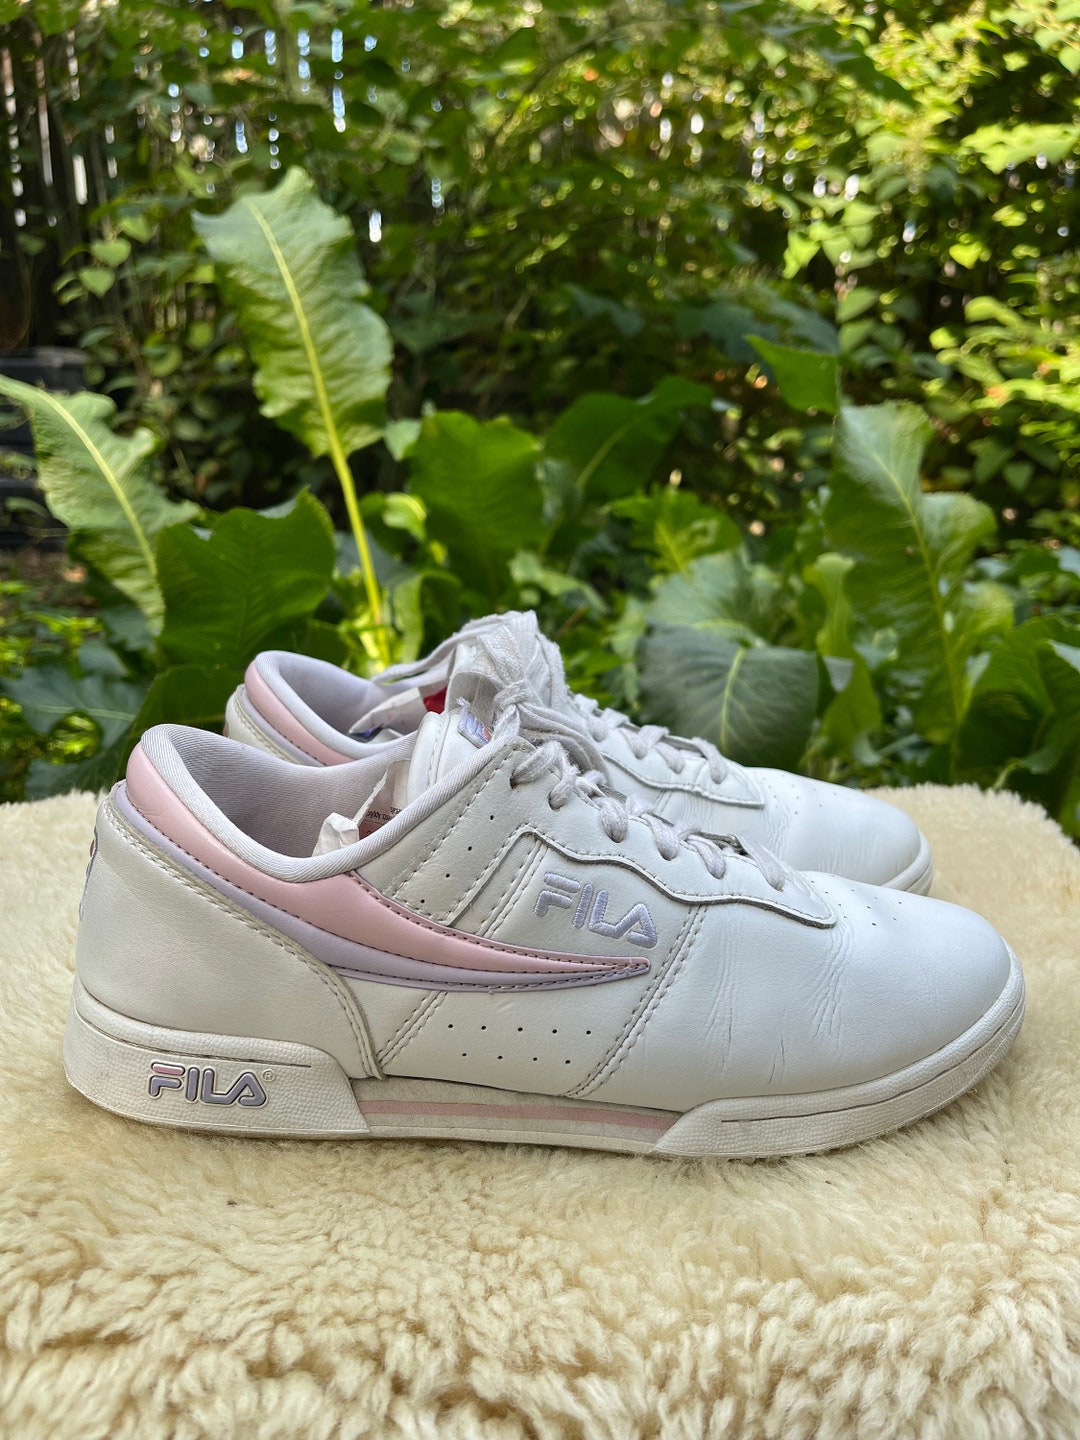 Vtg Fila 90s Colour Way Original Fitness Sneakers White Pink - Etsy